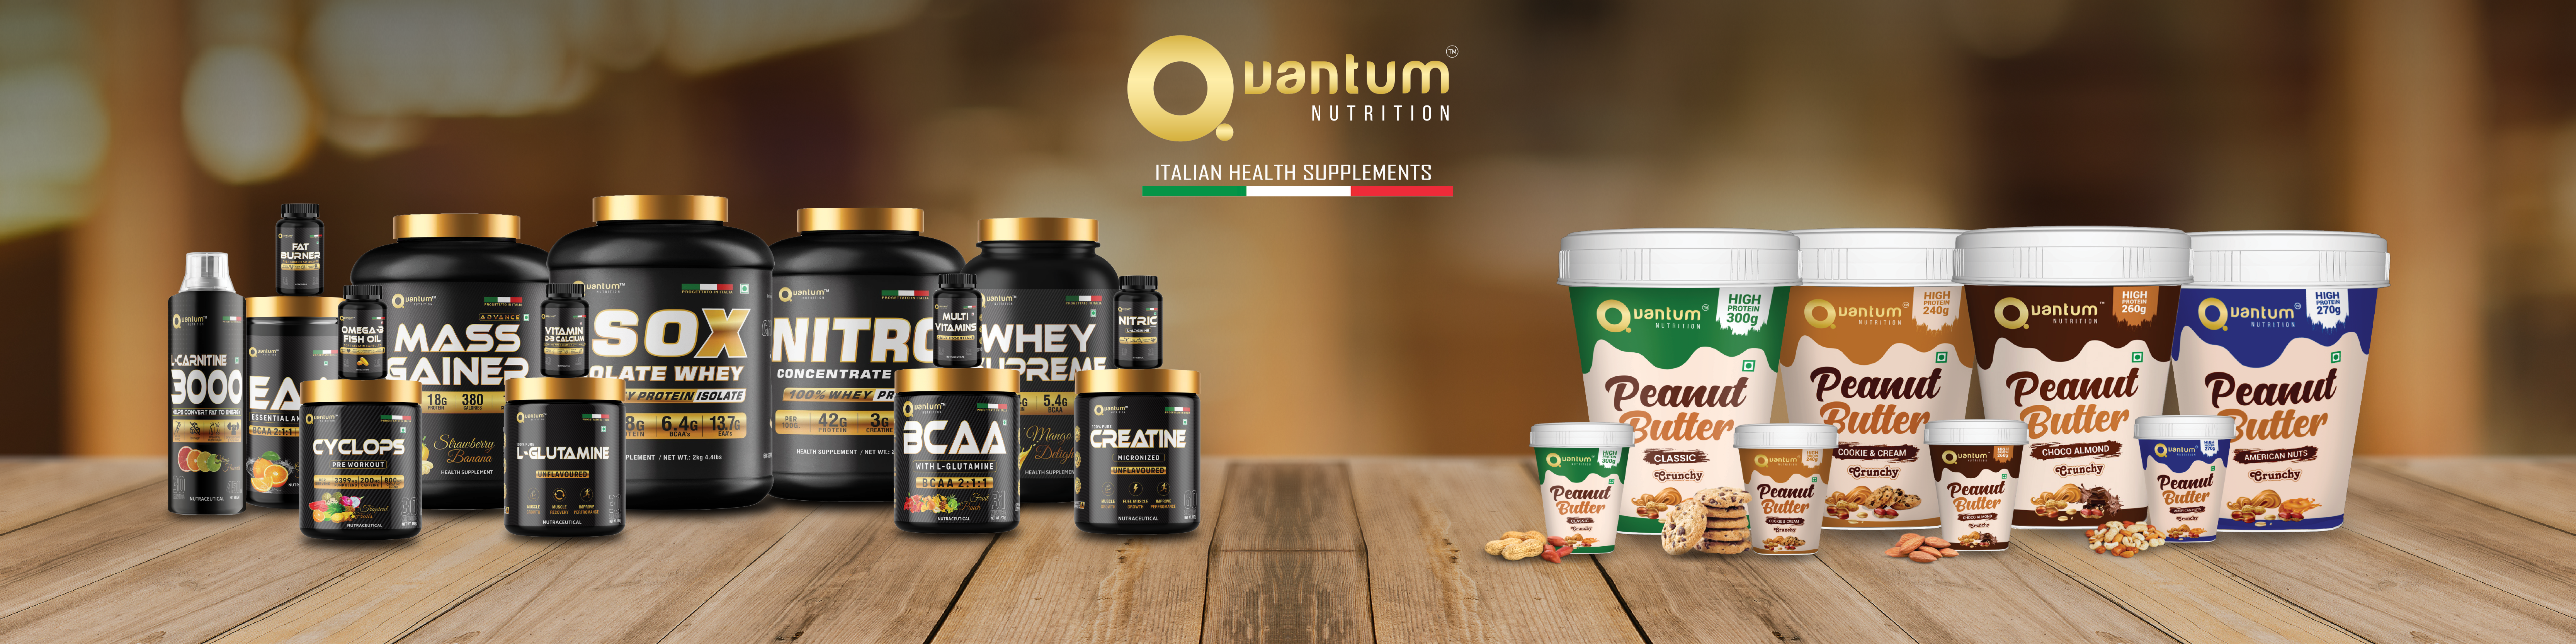 Quantum Nutrition products